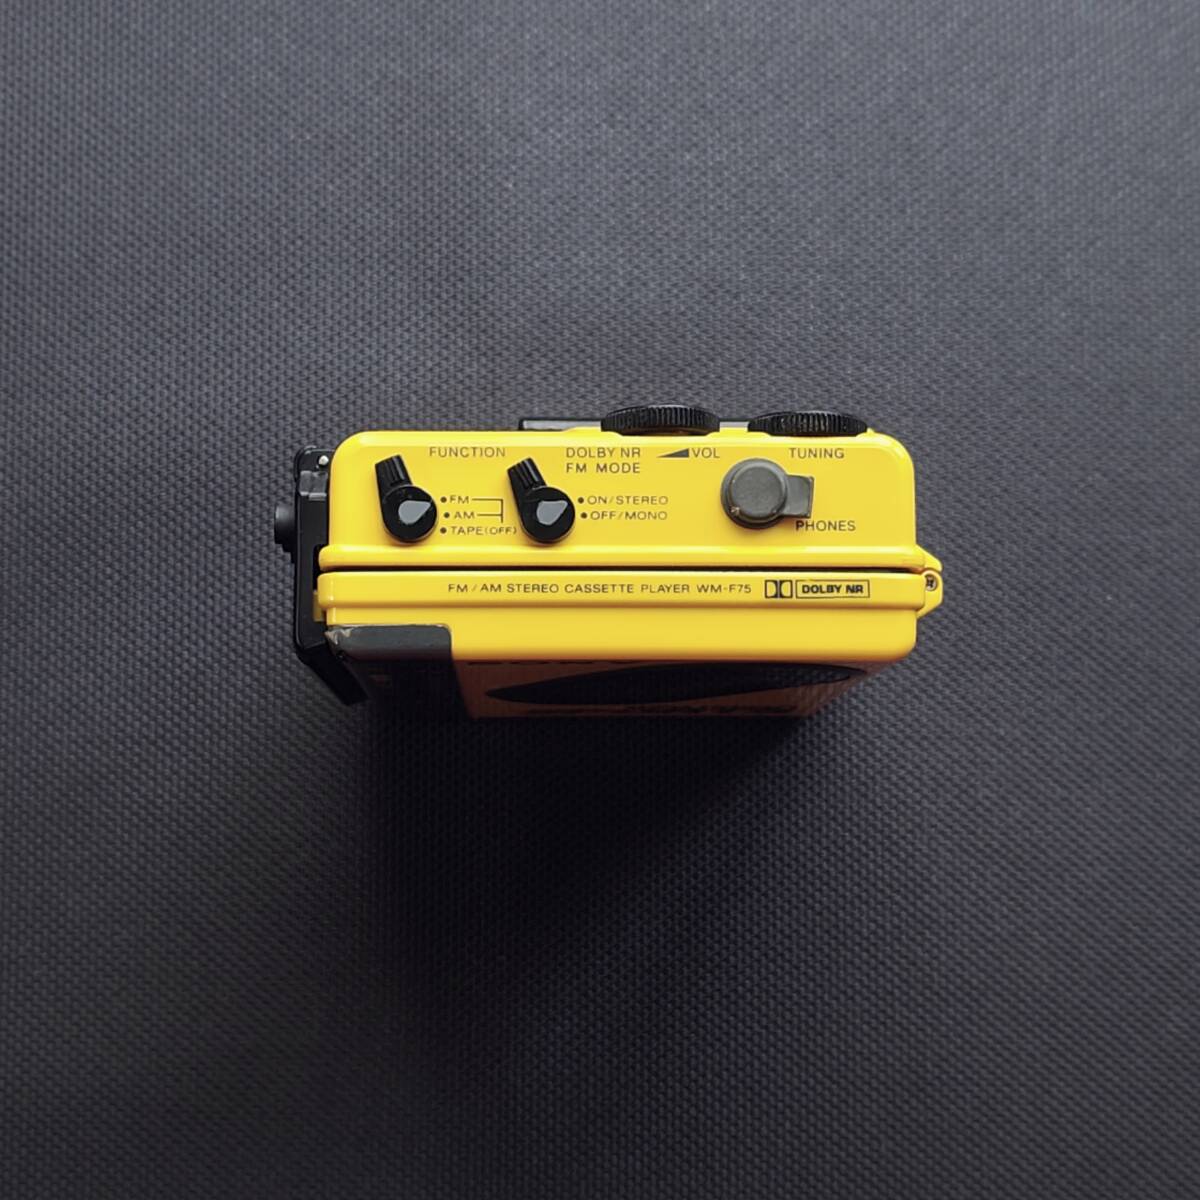 [ electrification reproduction operation verification goods ] cassette tape player Sony sport Walkman SONY WALKMAN WM-F75 GIG series wide FM/AM radio attaching 